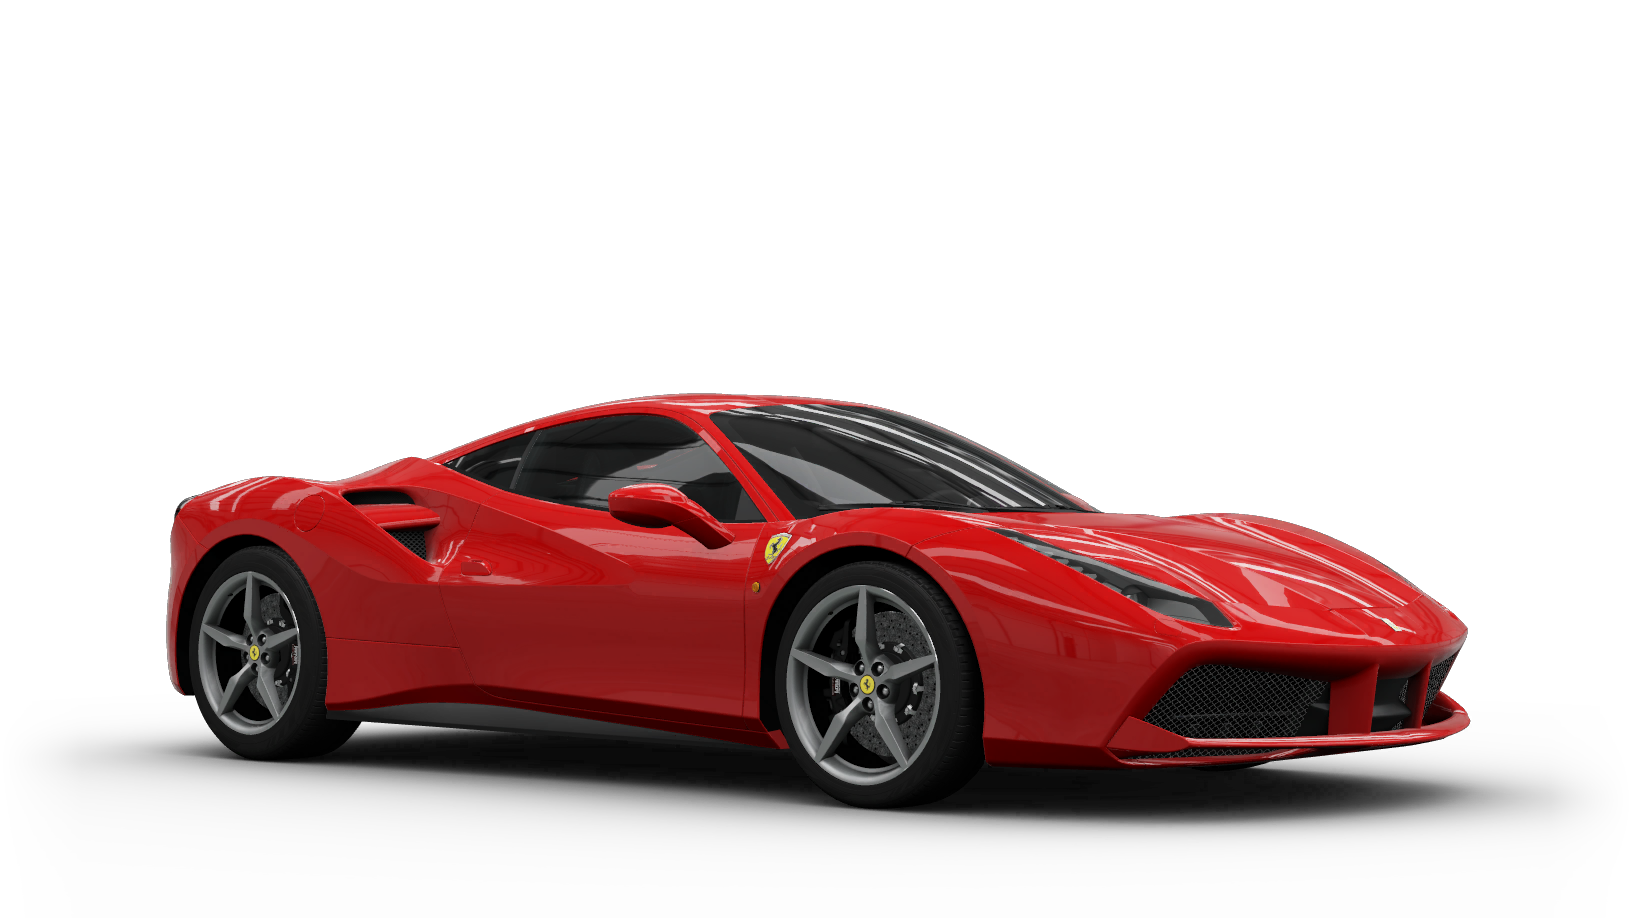 News Ferrari 488 Gtb To Replace 458 Italia